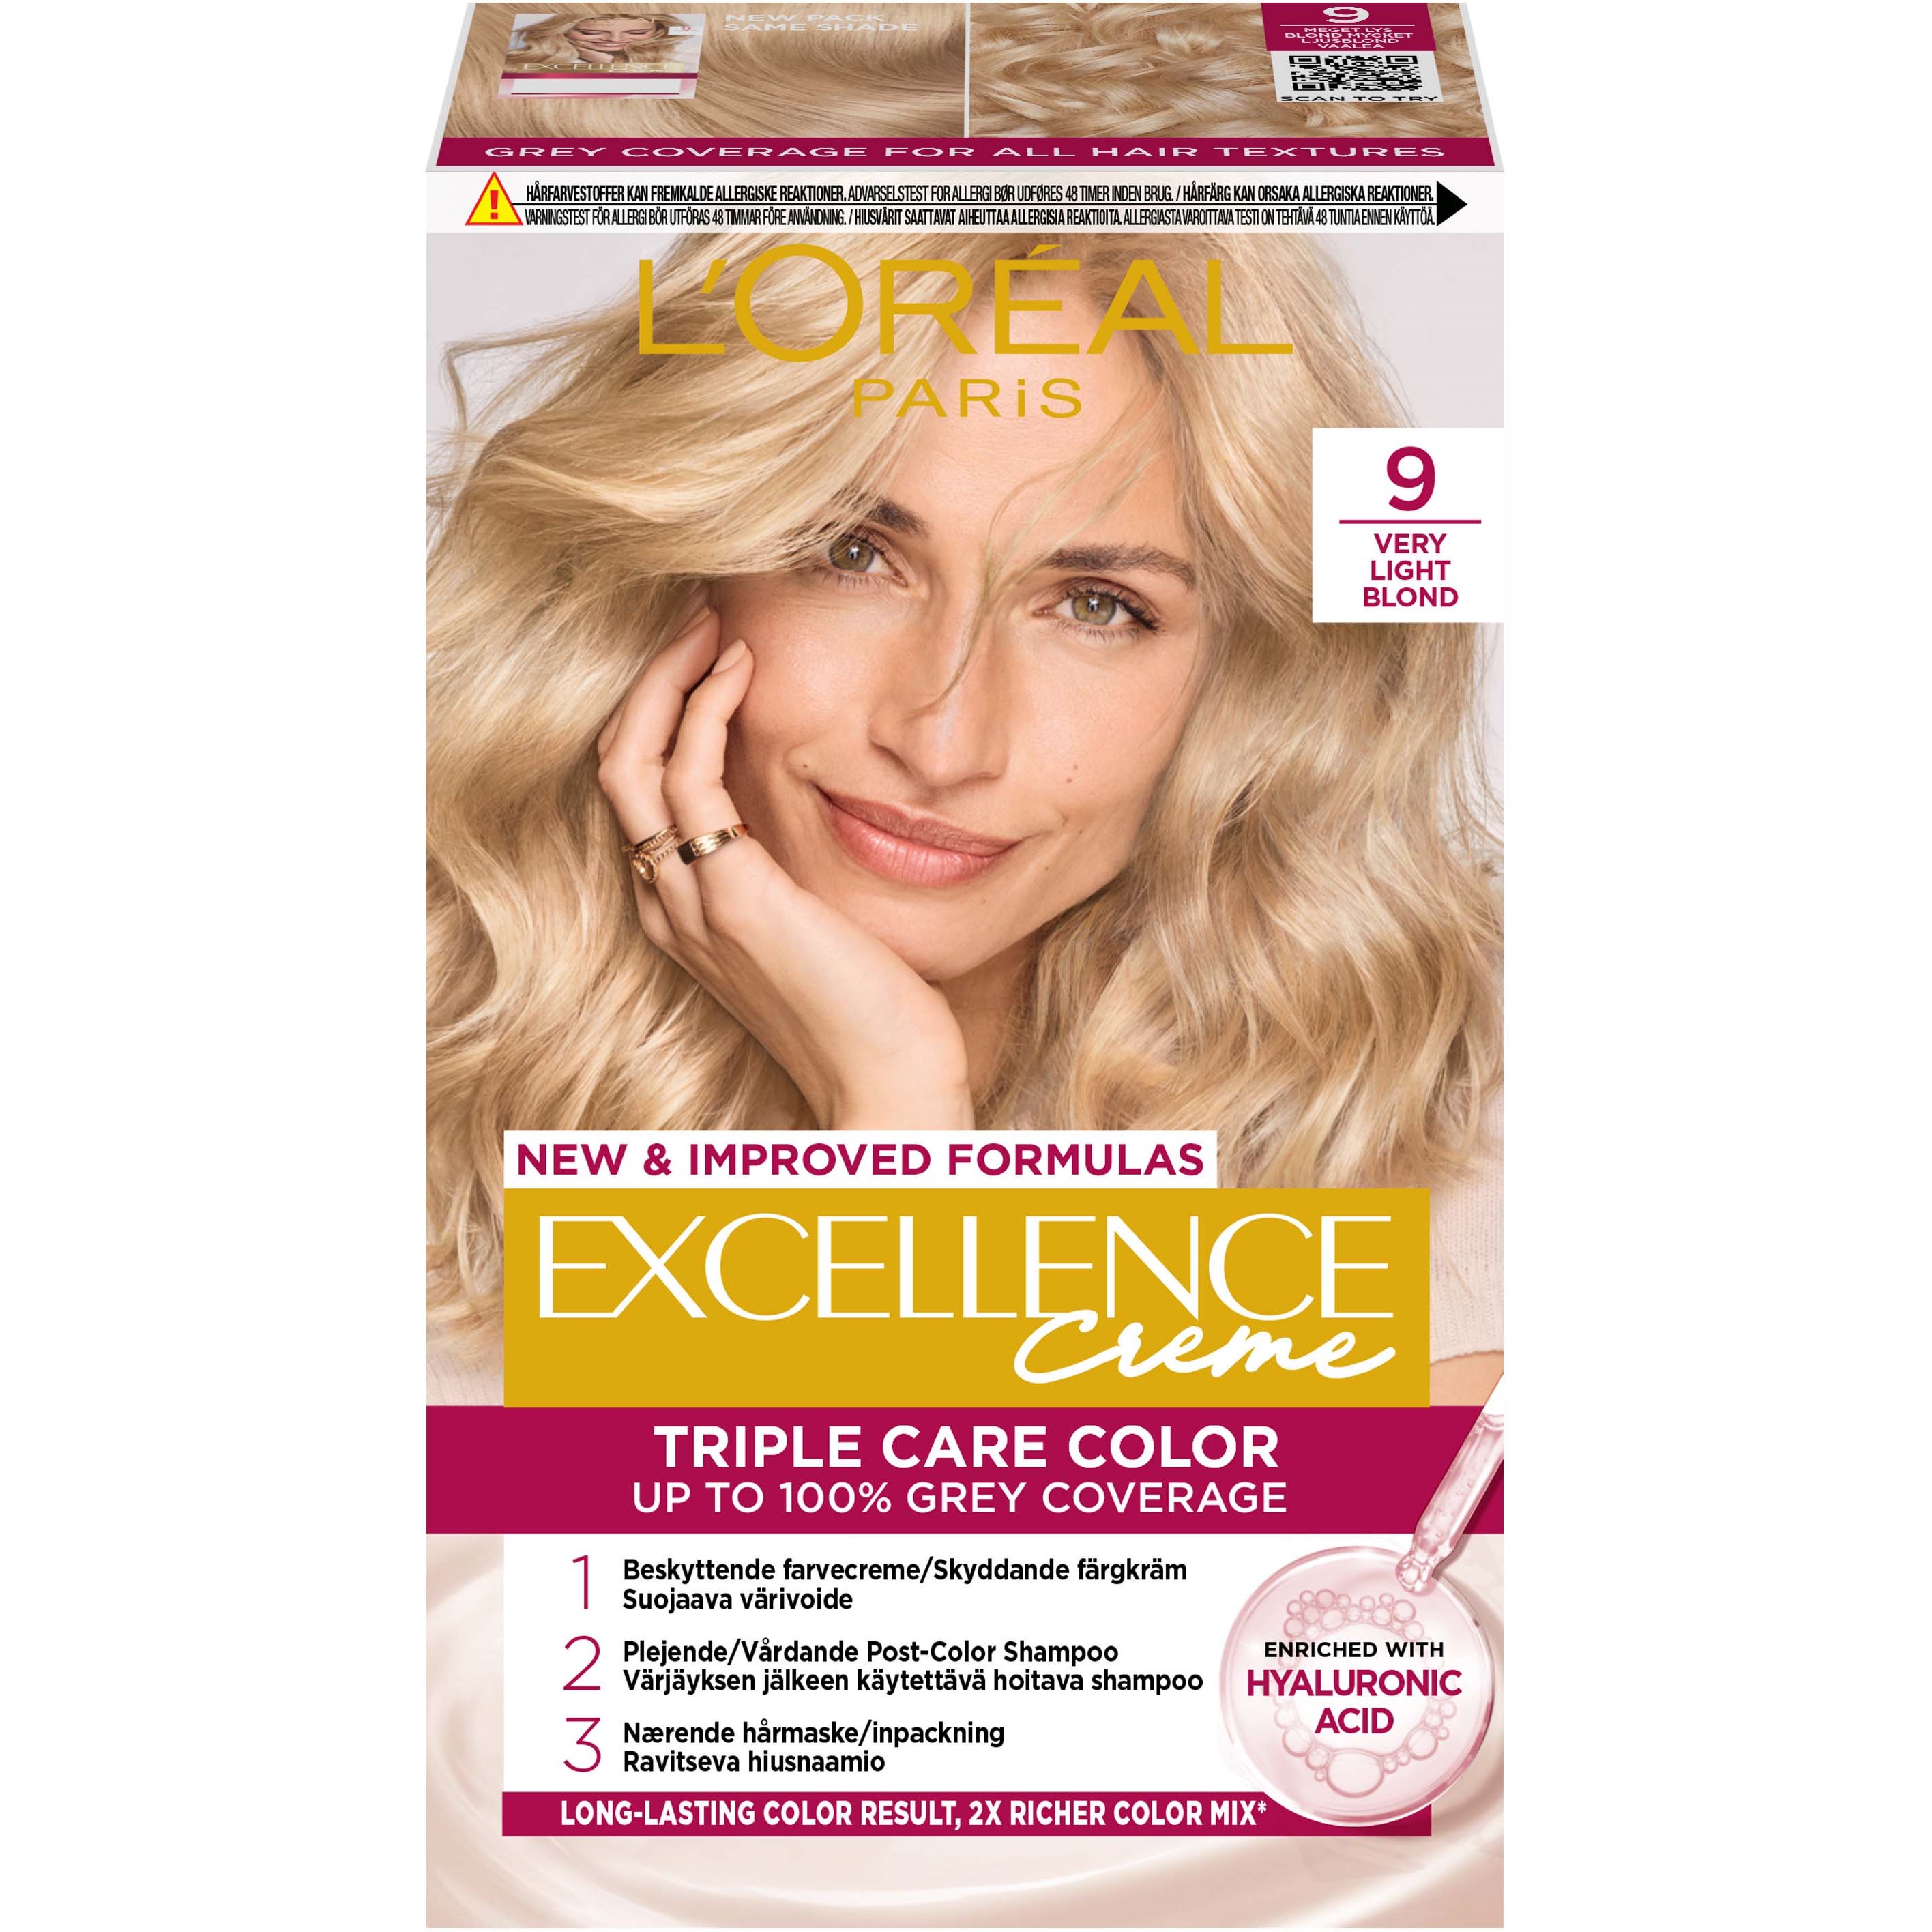 Bilde av Loreal Paris Excellence Crème Triple Care Color 9 Very Light Blonde